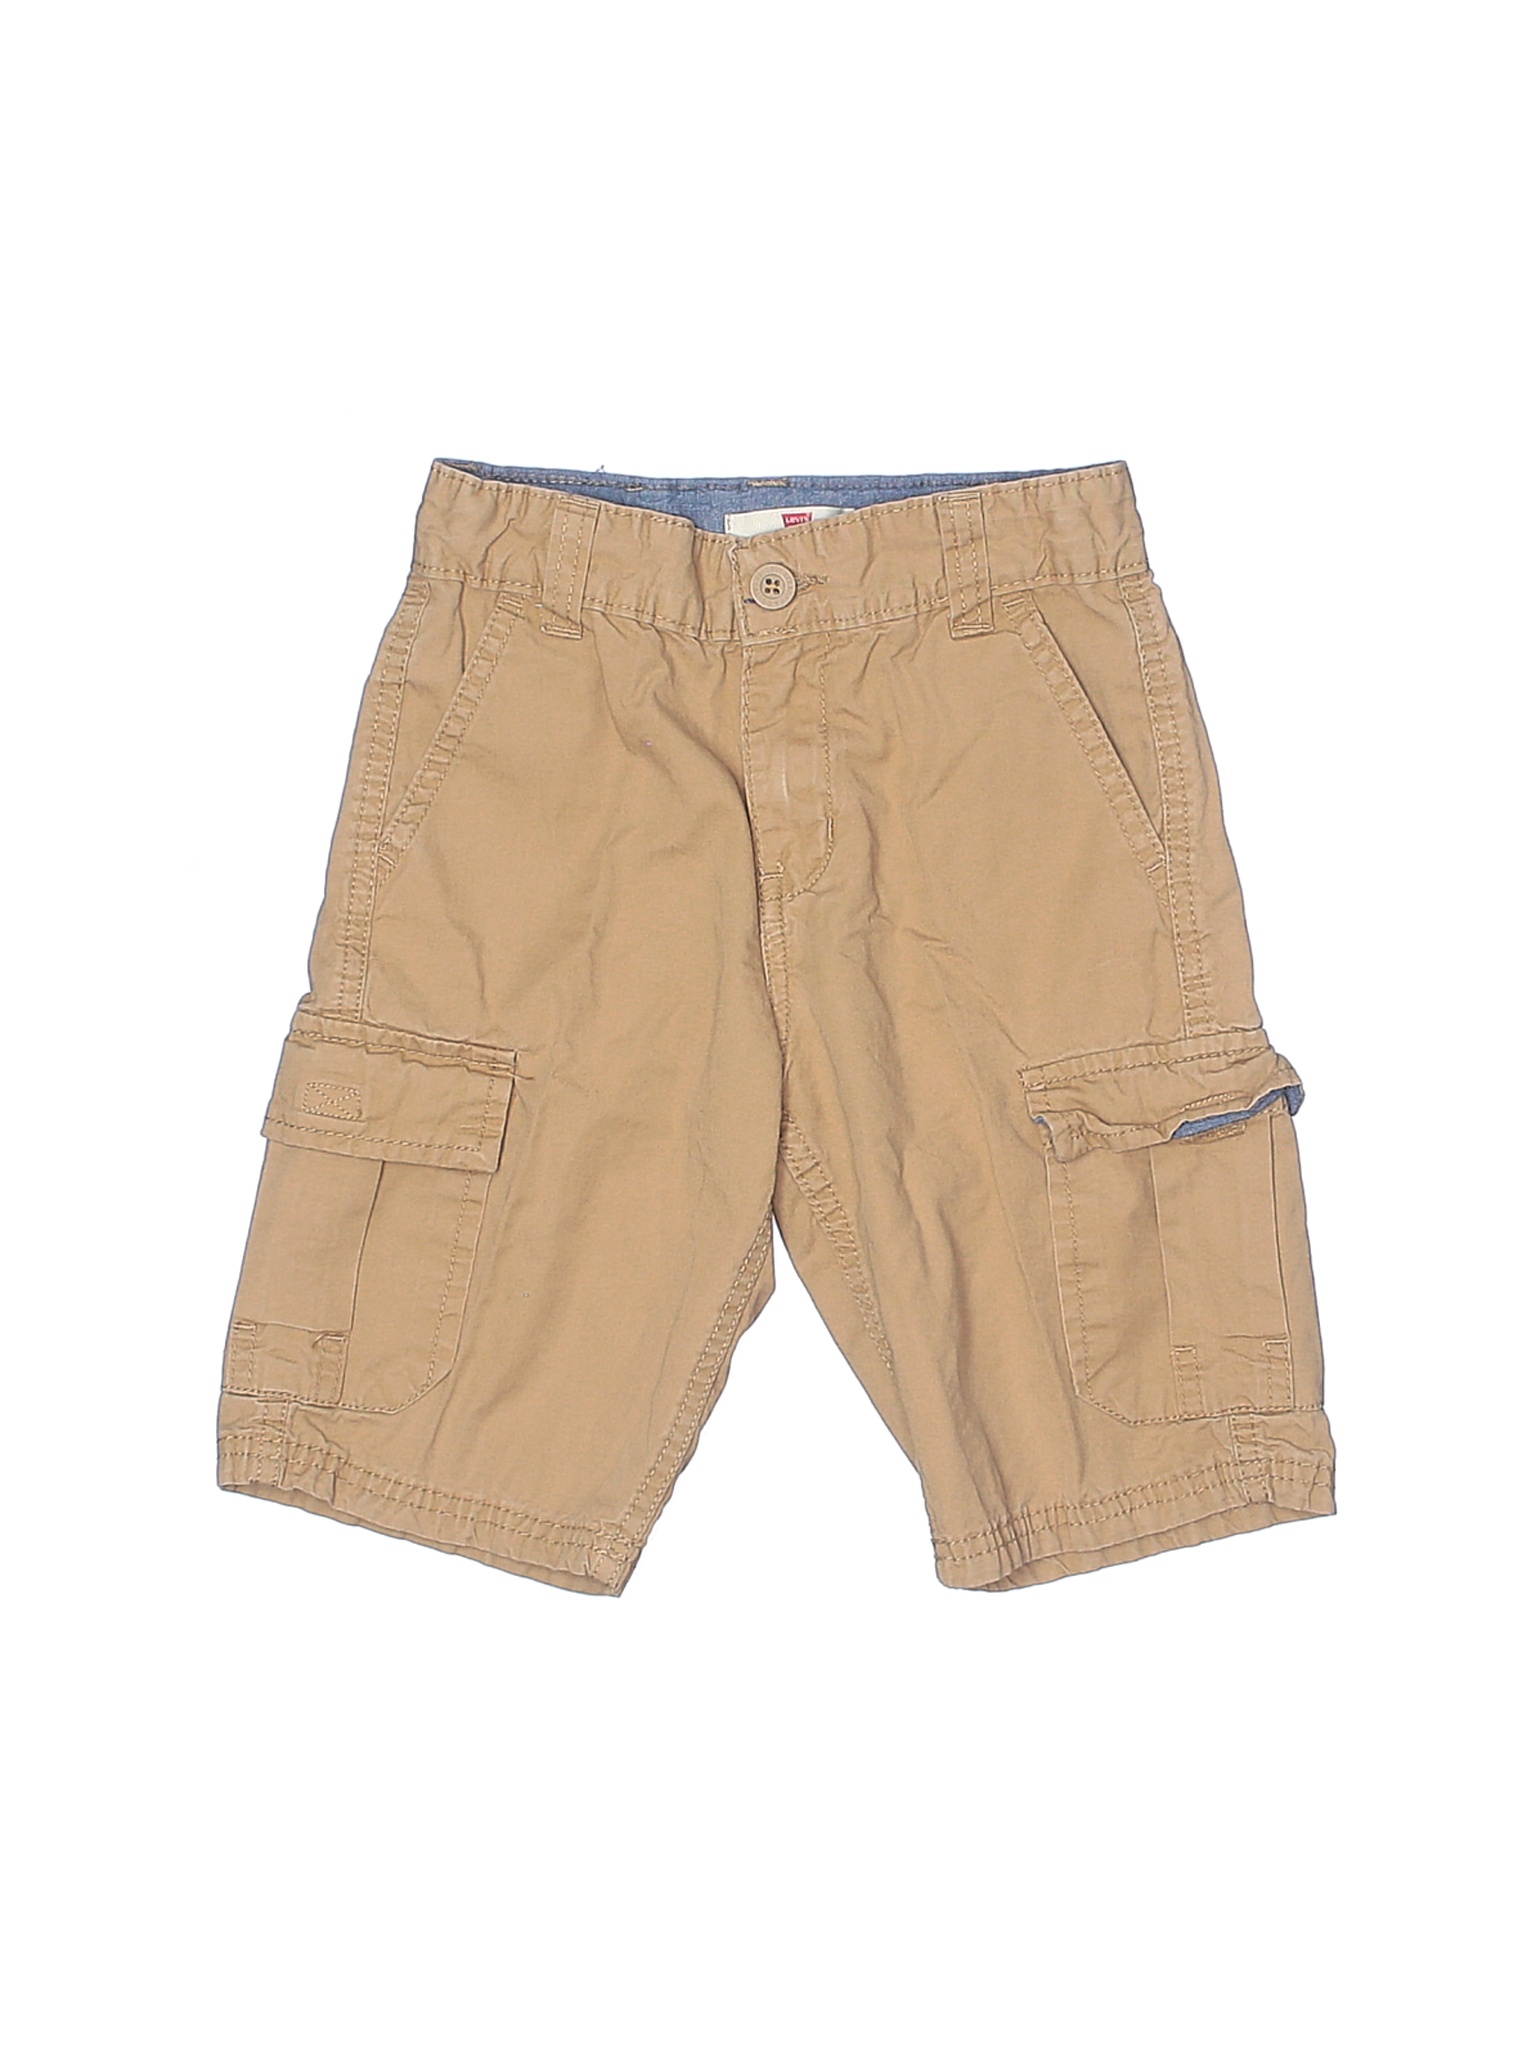 Levi's Boys Brown Cargo Shorts 7 | eBay